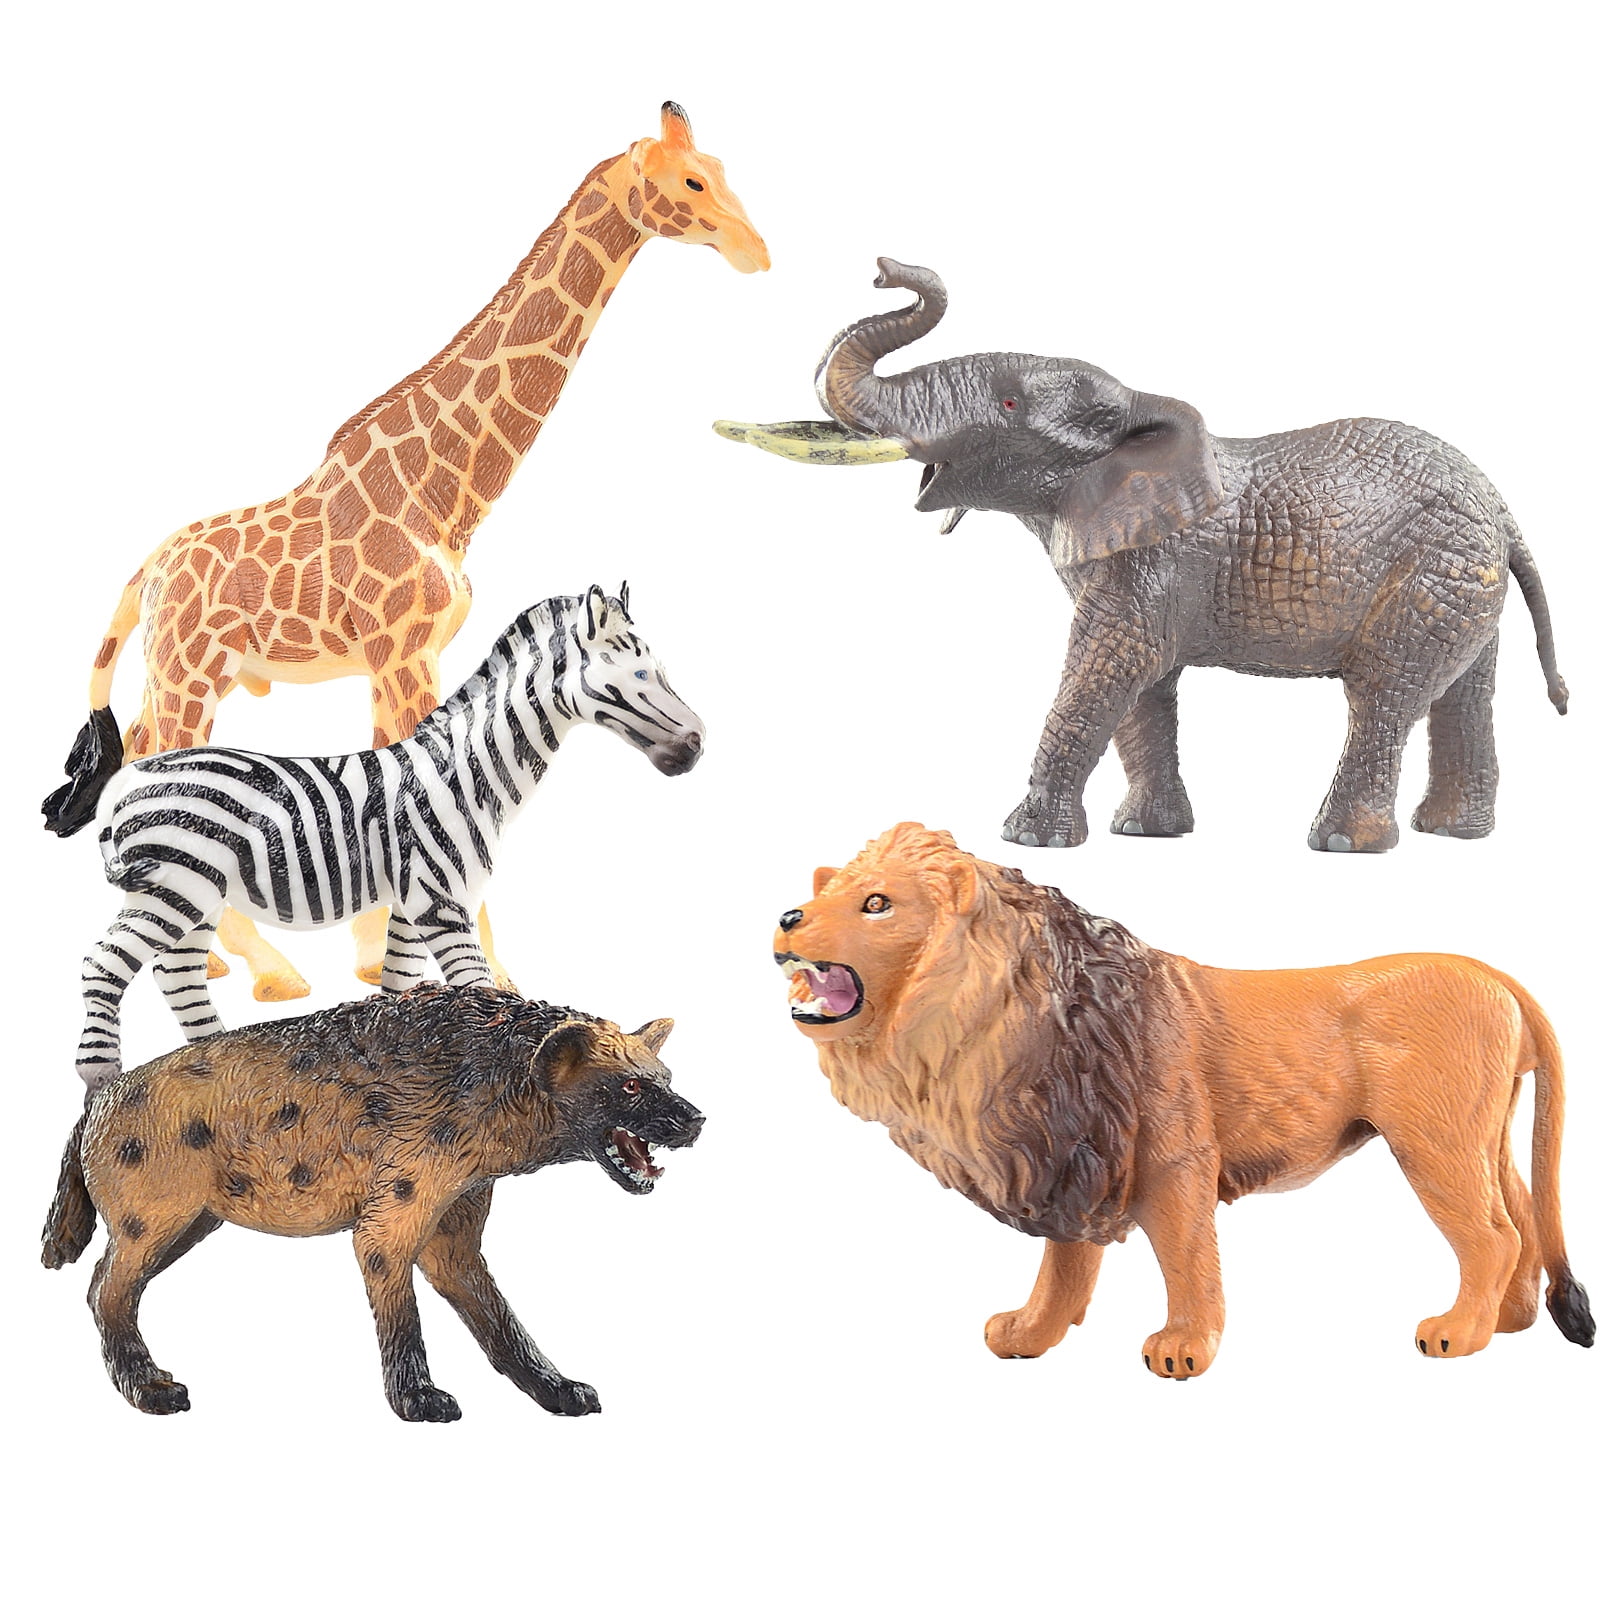 Plastic Simulation Giraffe Animal Model Action figure Toy for Kids Toddler 